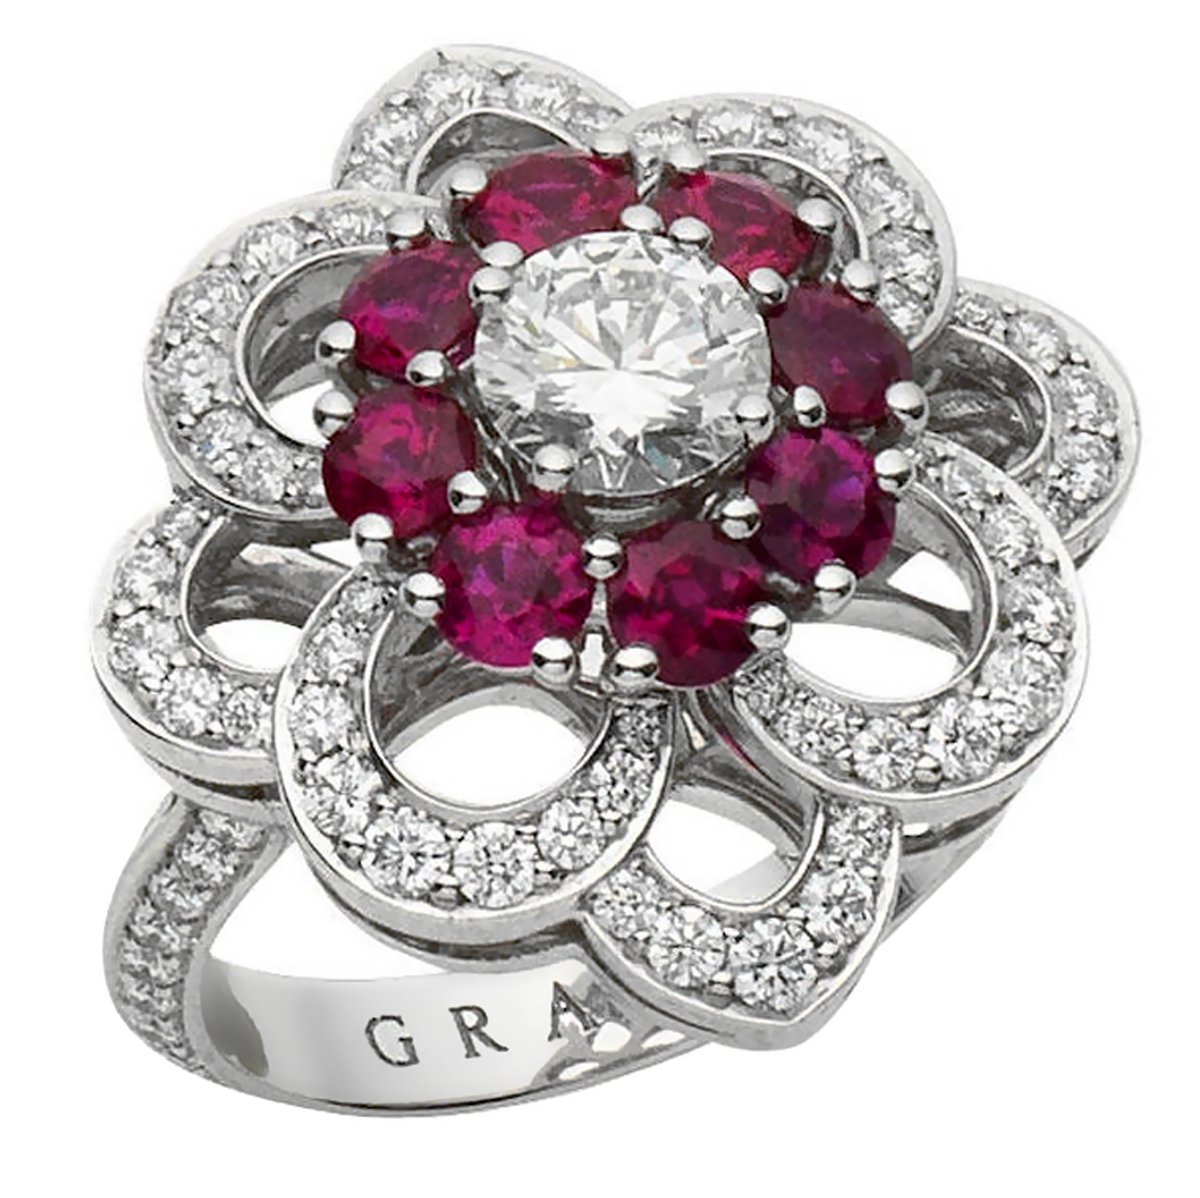 Spellbinding diamond bracelet and ring by Graff. Credit: champagnegem # highjewelry #graff 